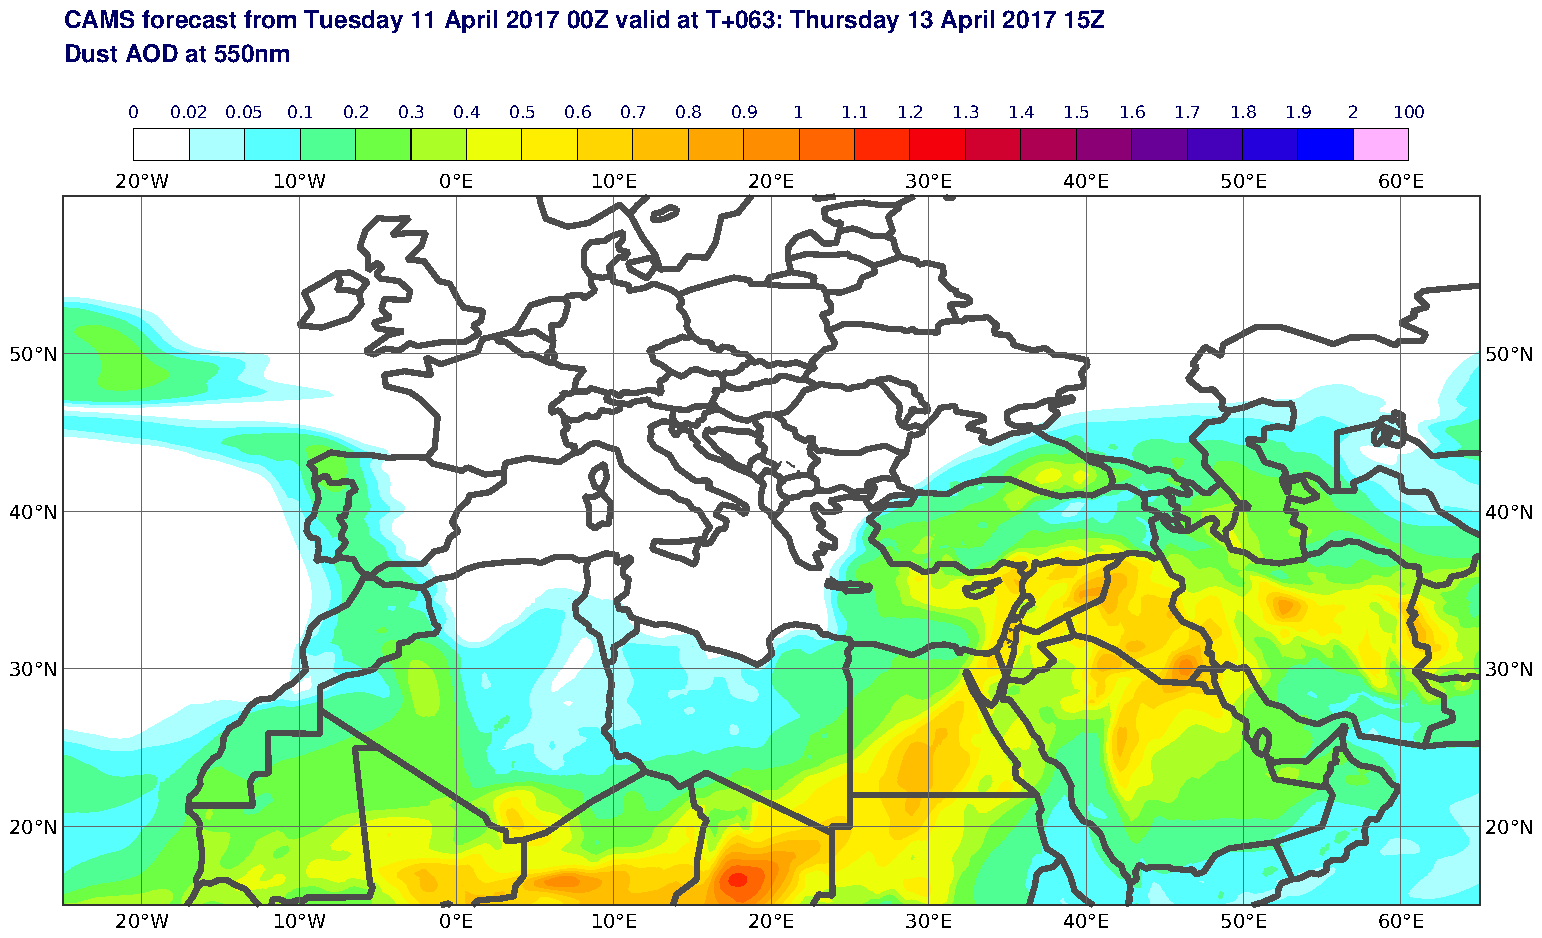 Dust AOD at 550nm valid at T63 - 2017-04-13 15:00